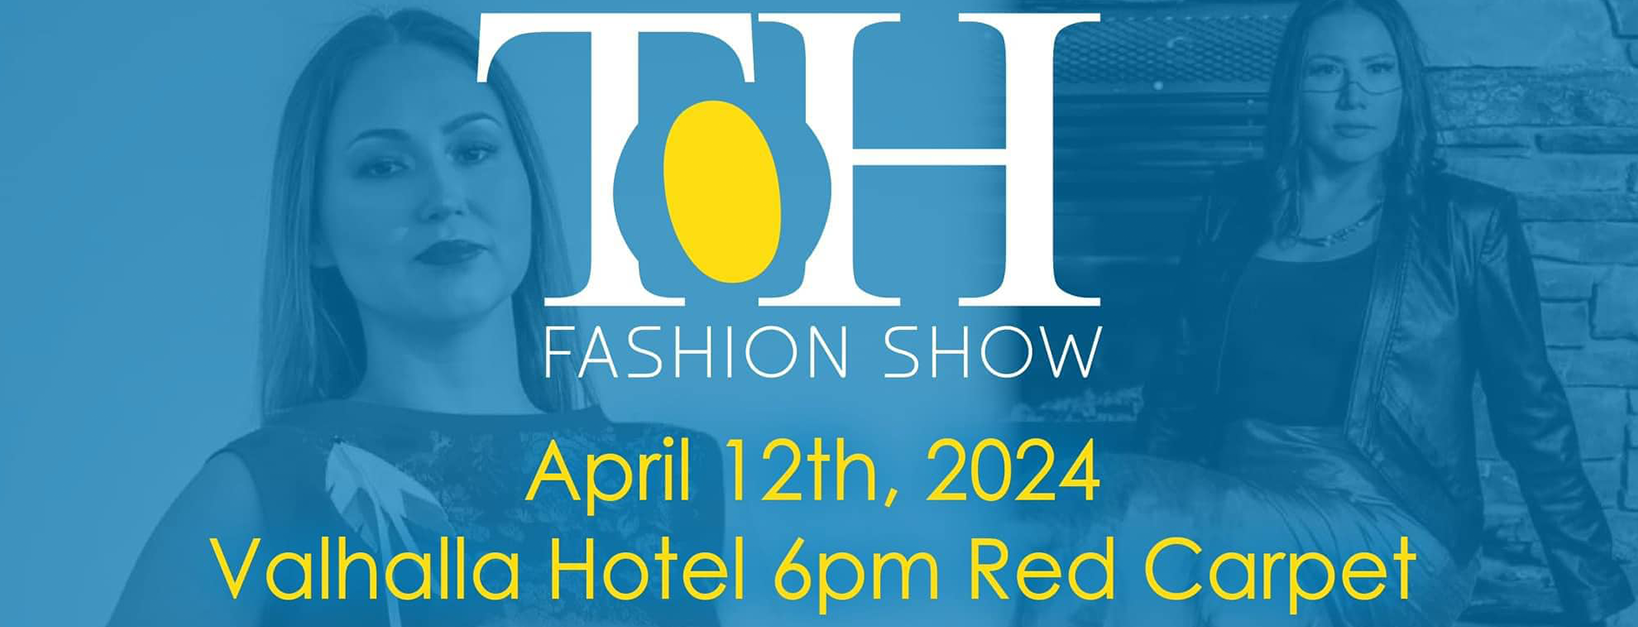 Tournament of Hope Fashion Show April 12